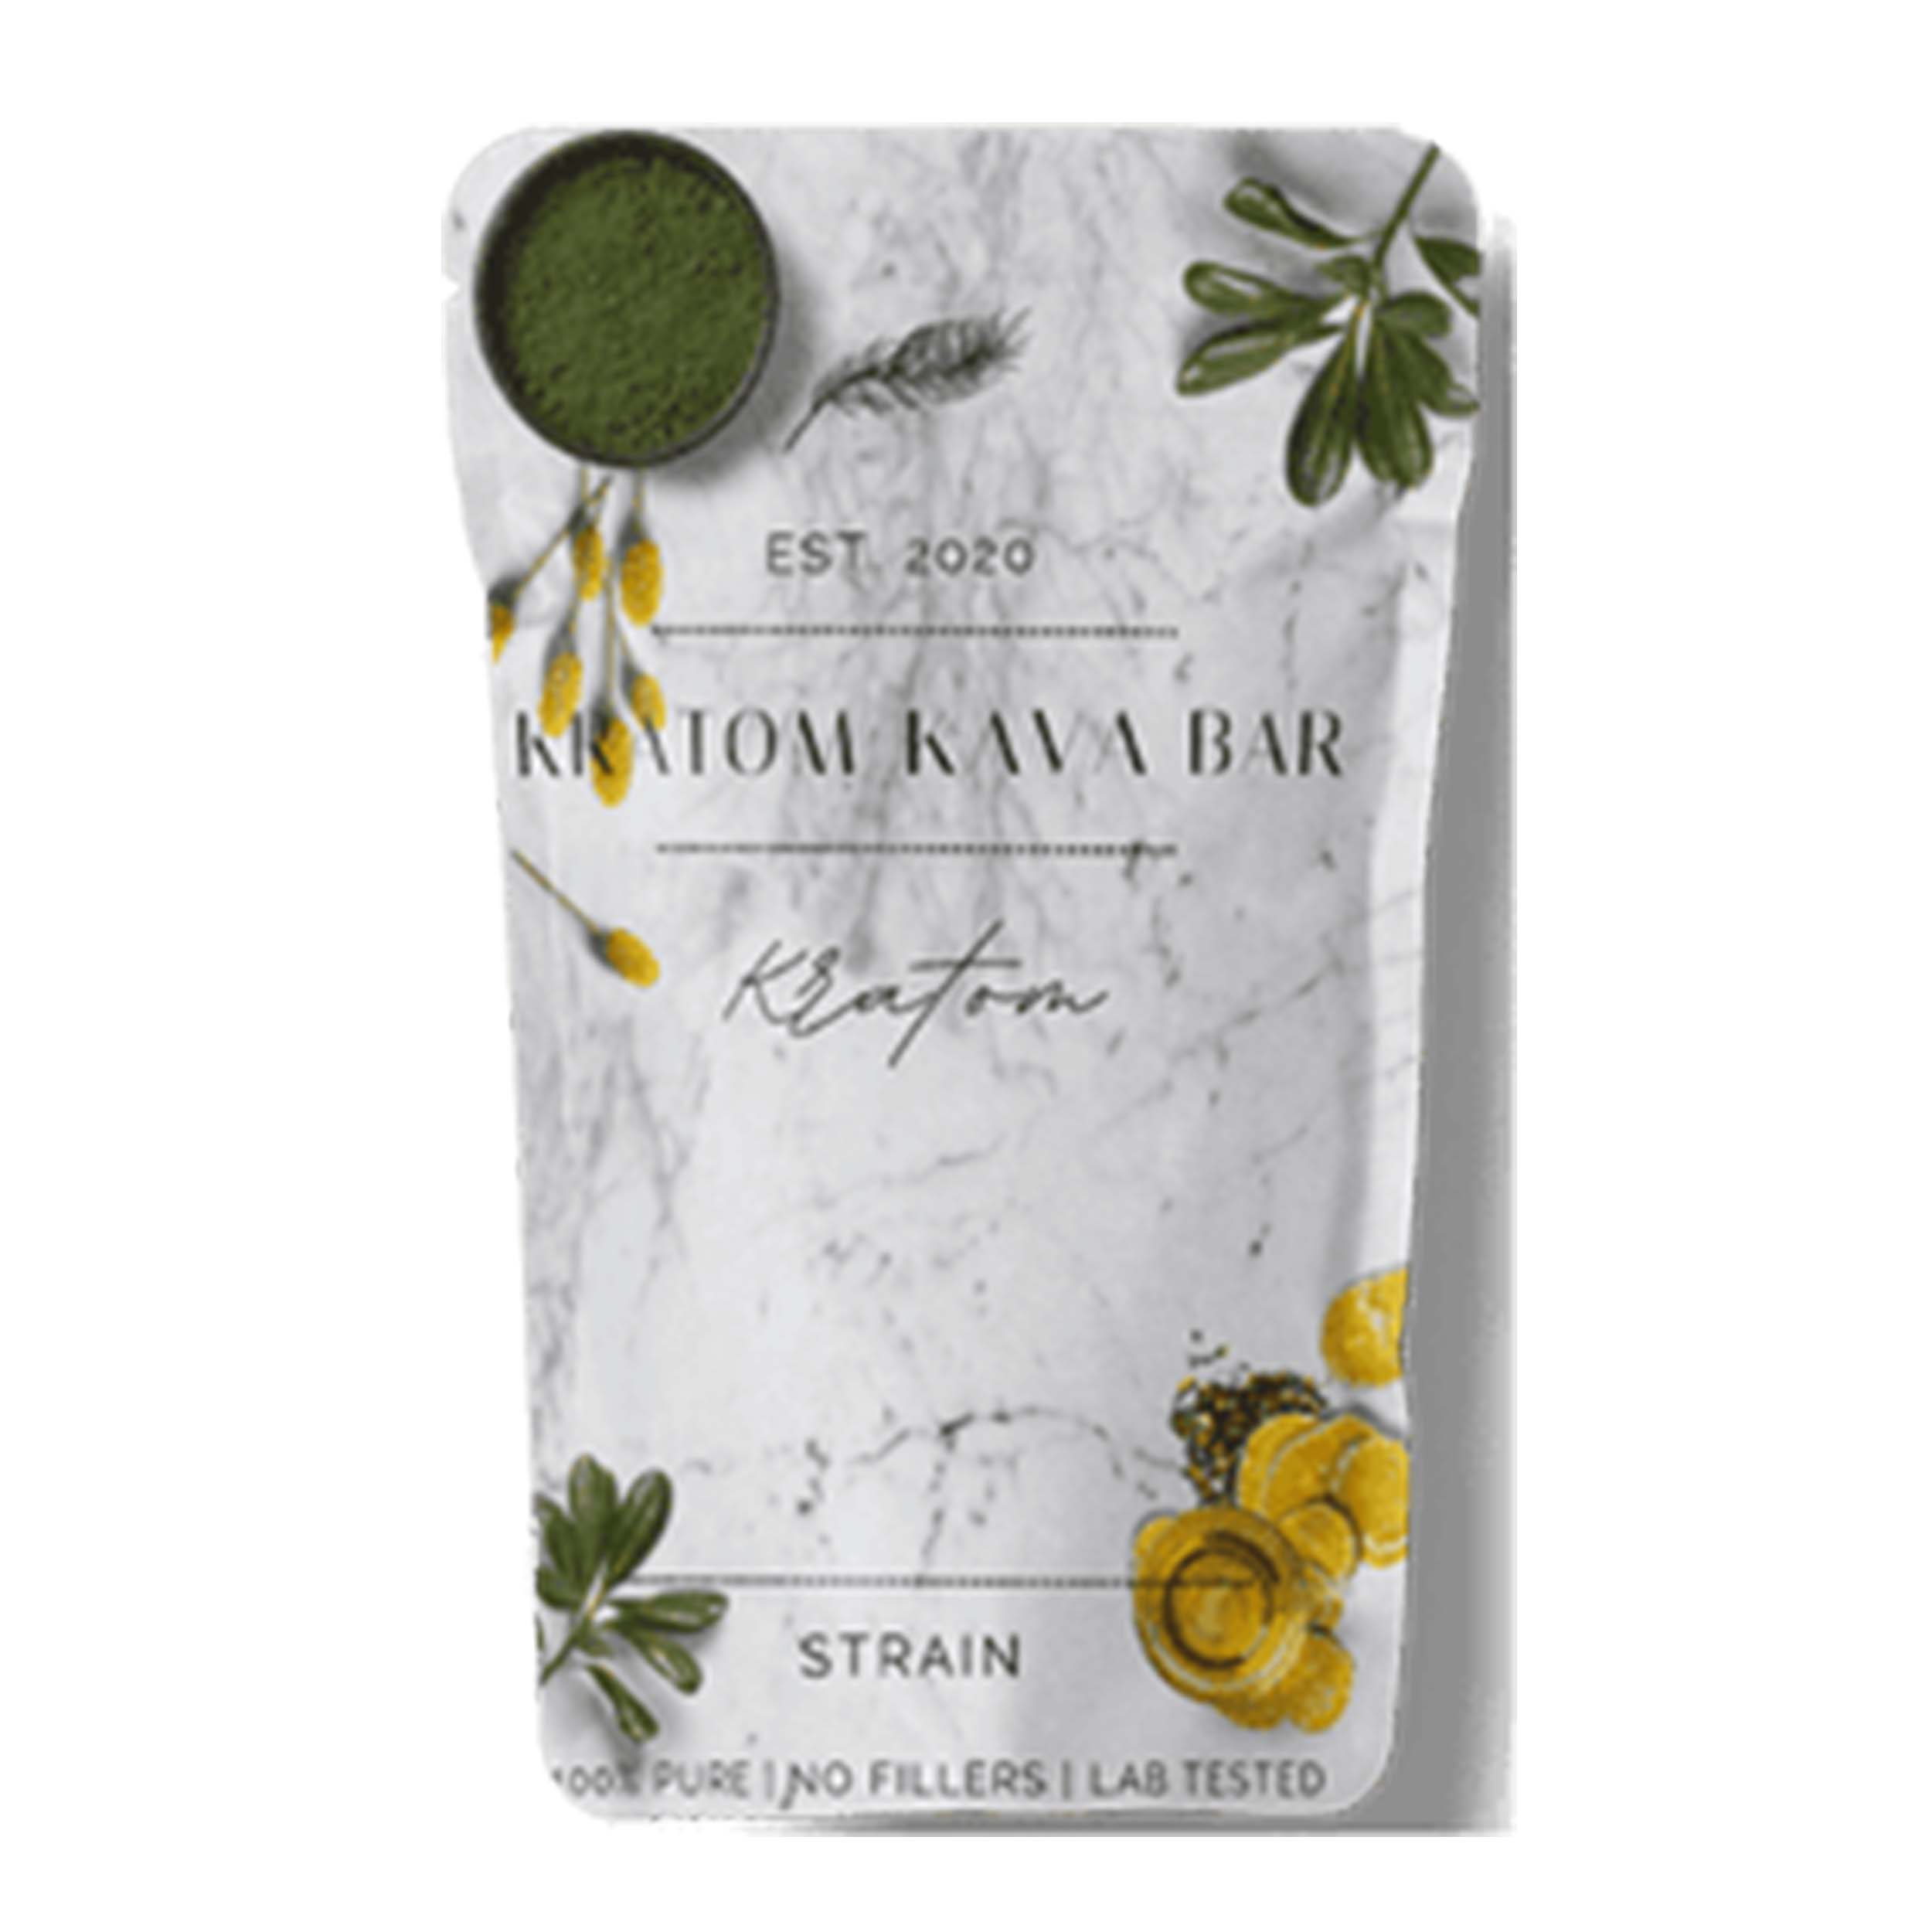 Kratom Kava Bar Green Bali Powder Best Price